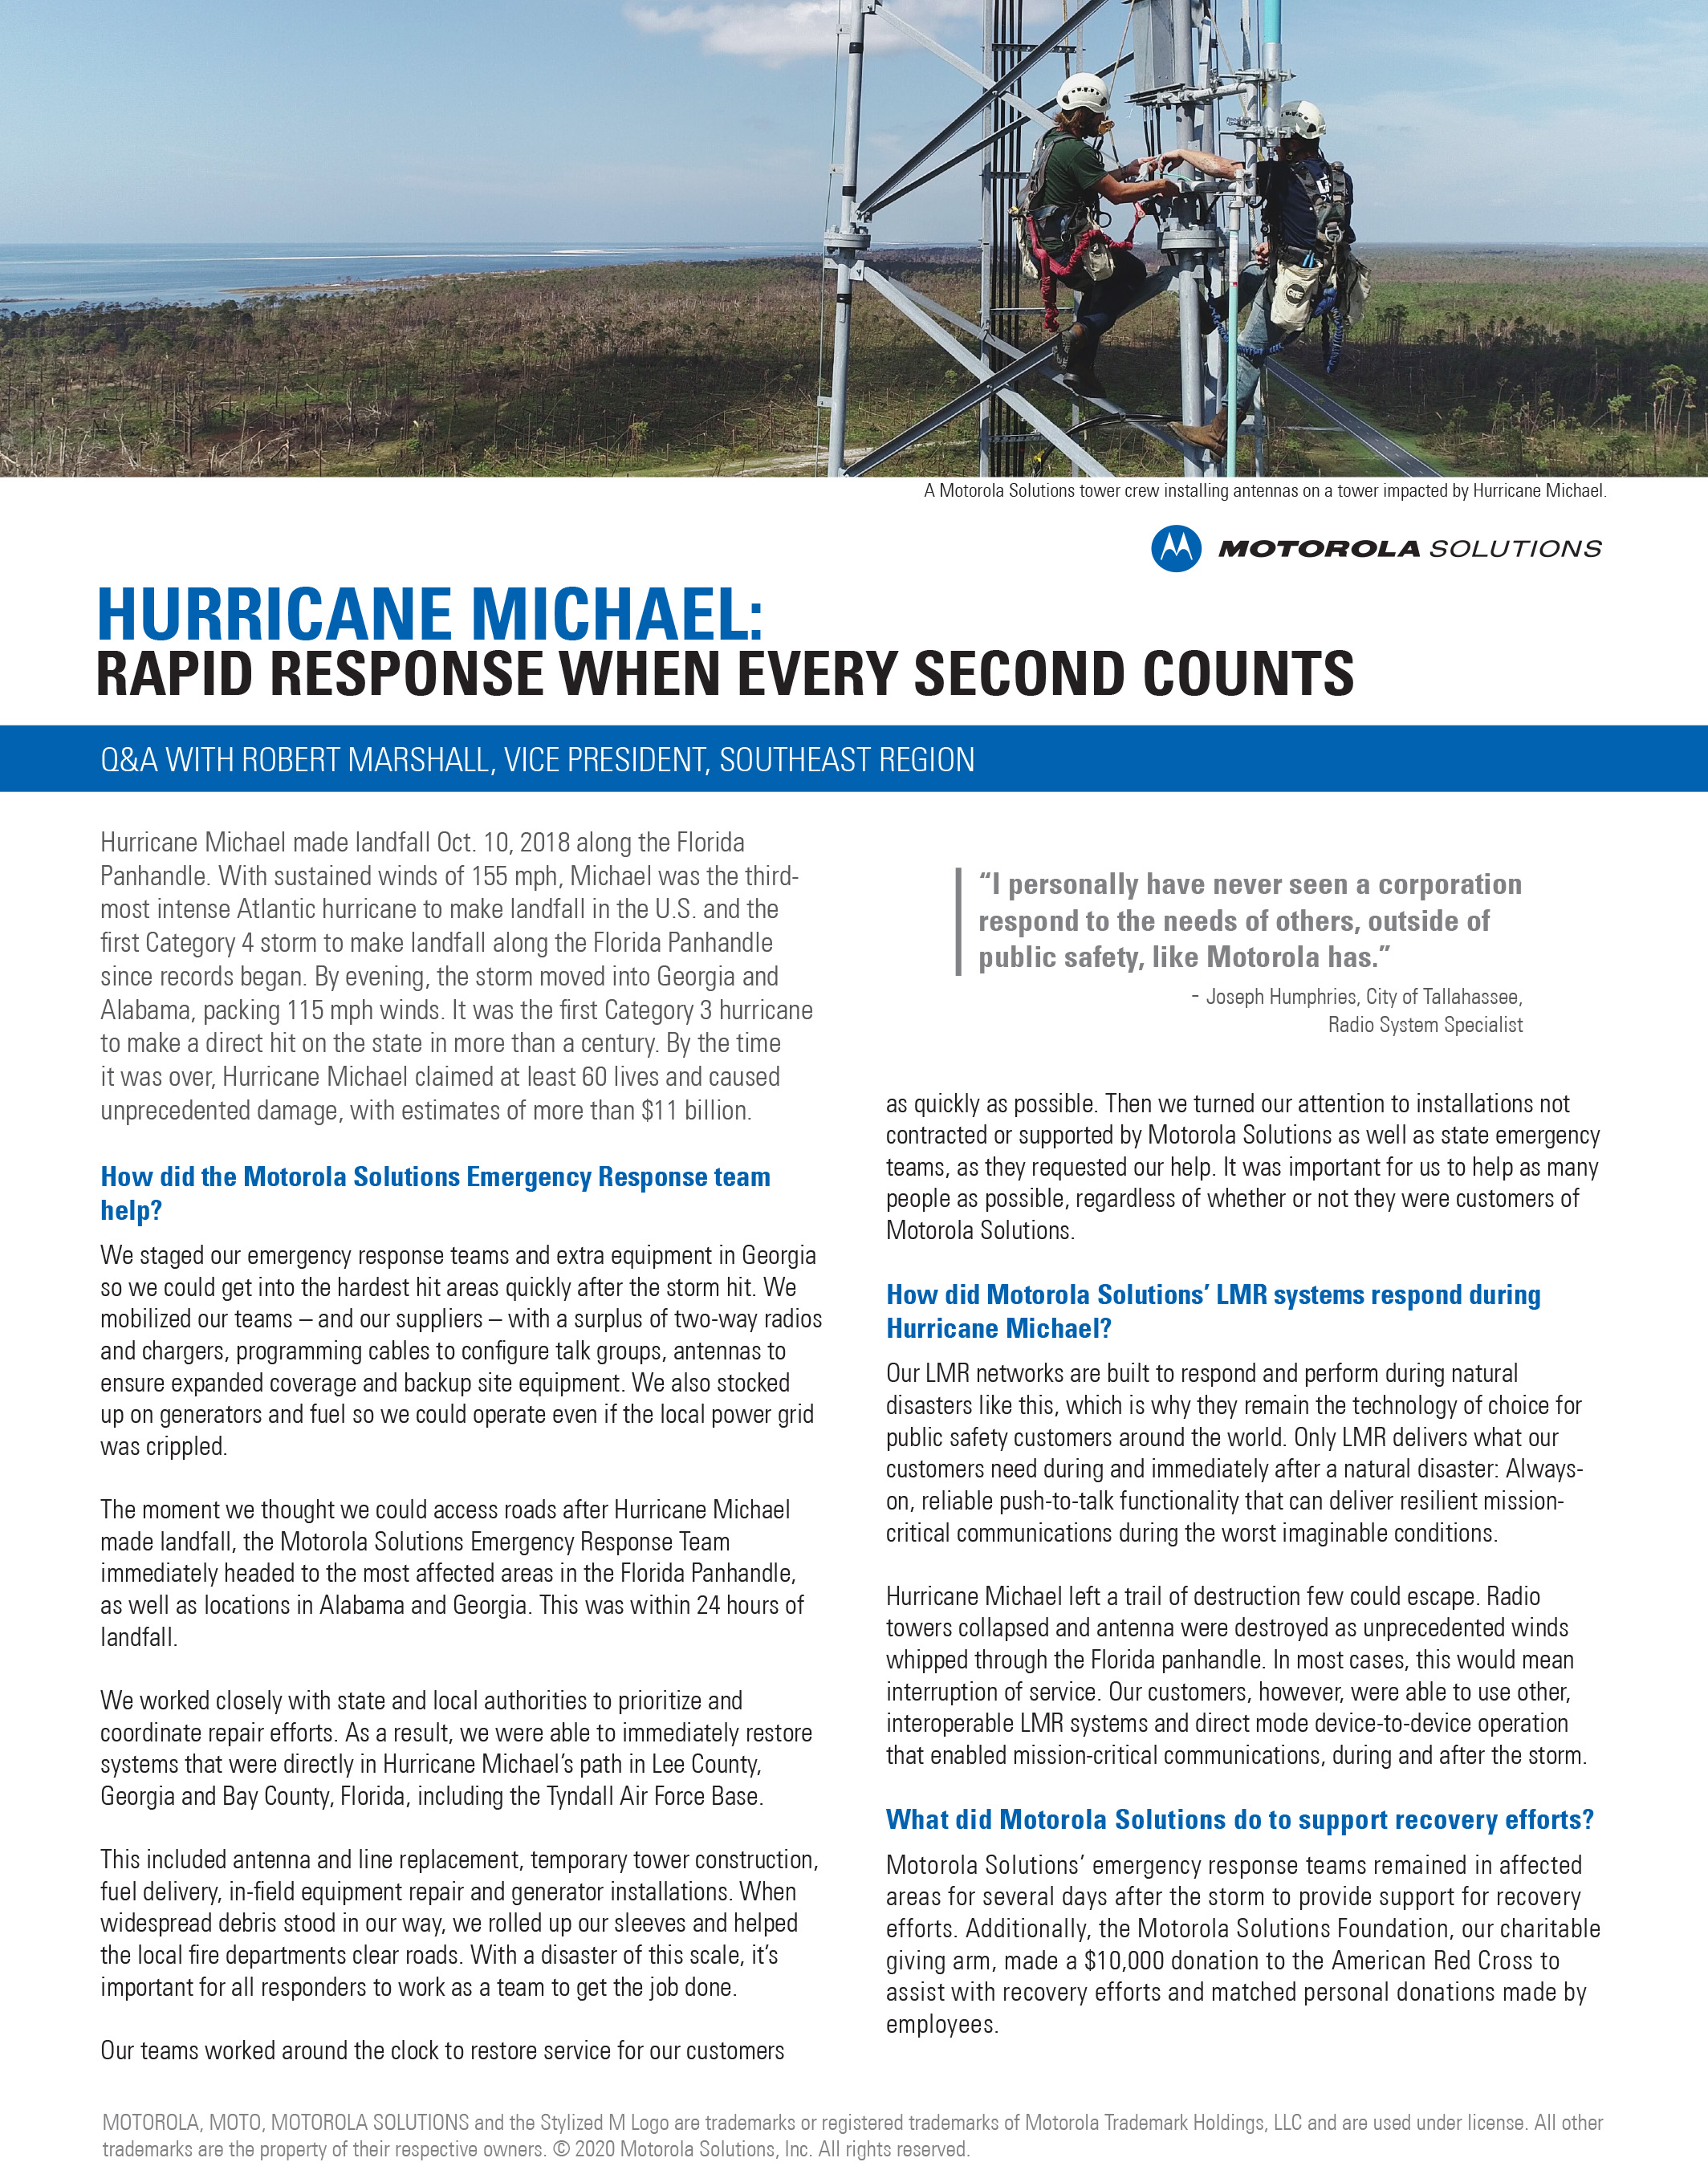 Hurricane Michael Case Study